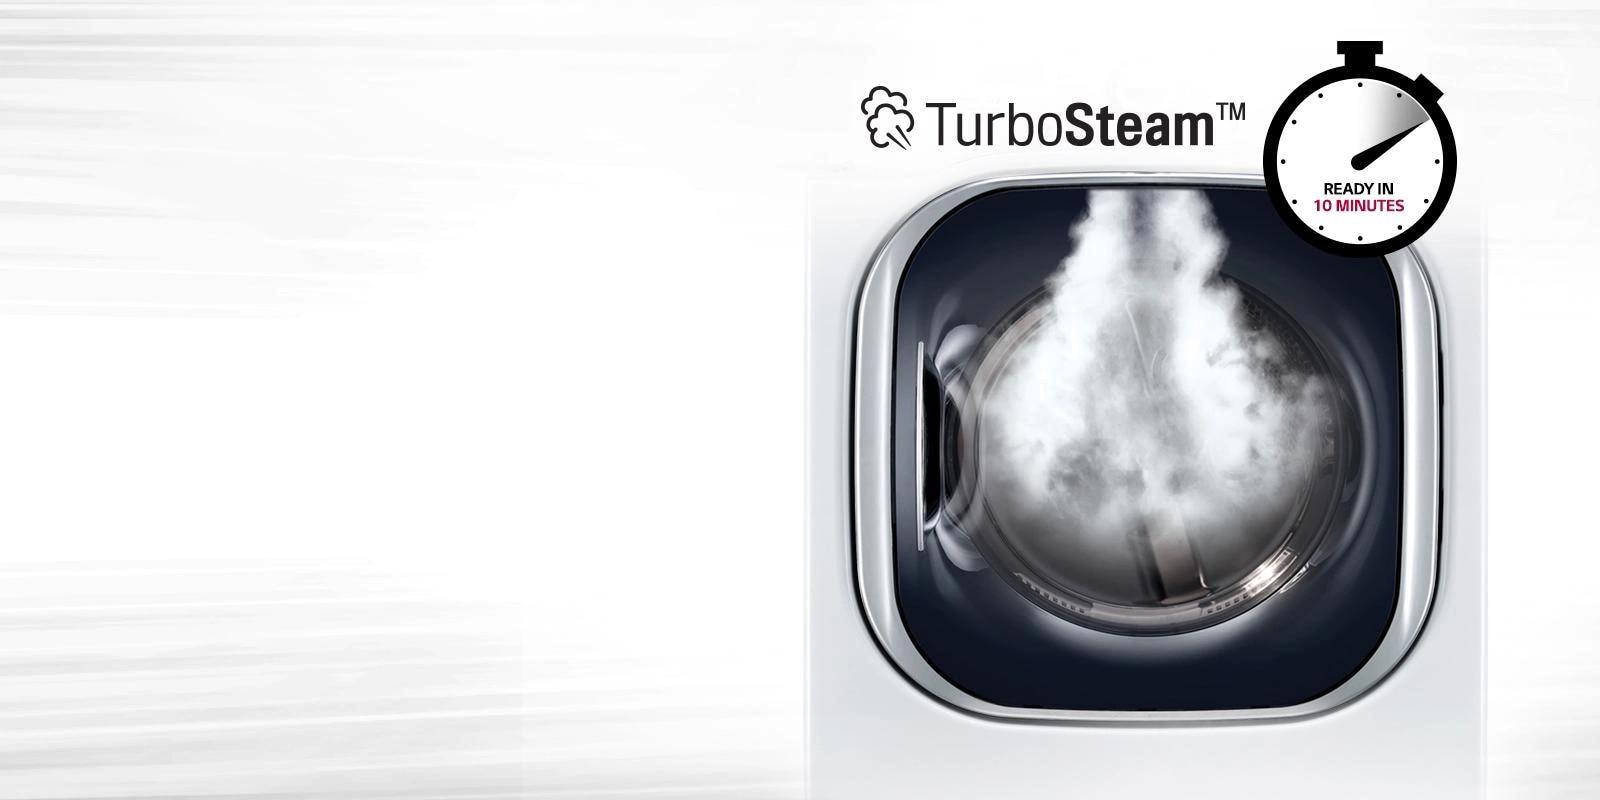 Dryer showcasing TurboSteam™ technology feature